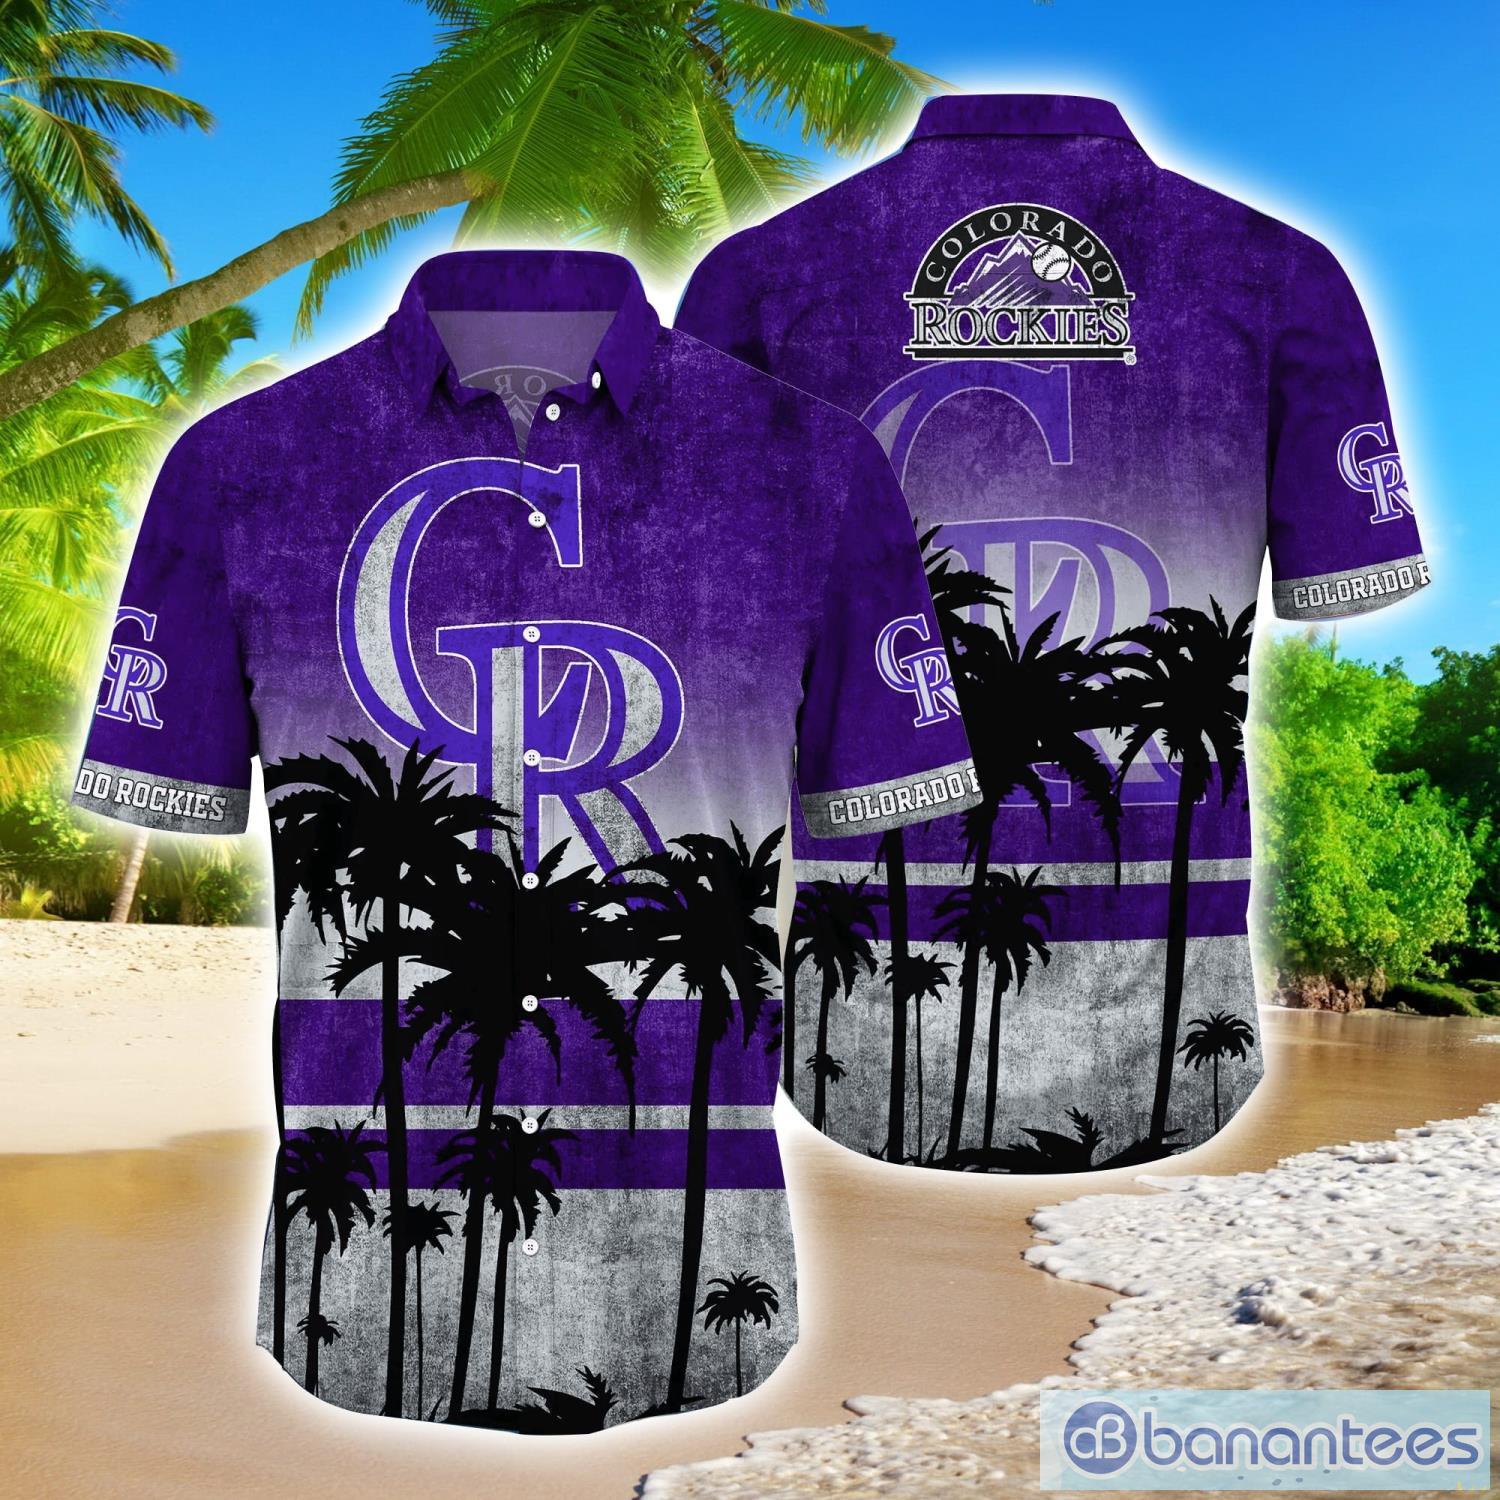 Colorado Rockies MLB Hawaiian Shirt For Men Women Gift For Fans -  Freedomdesign